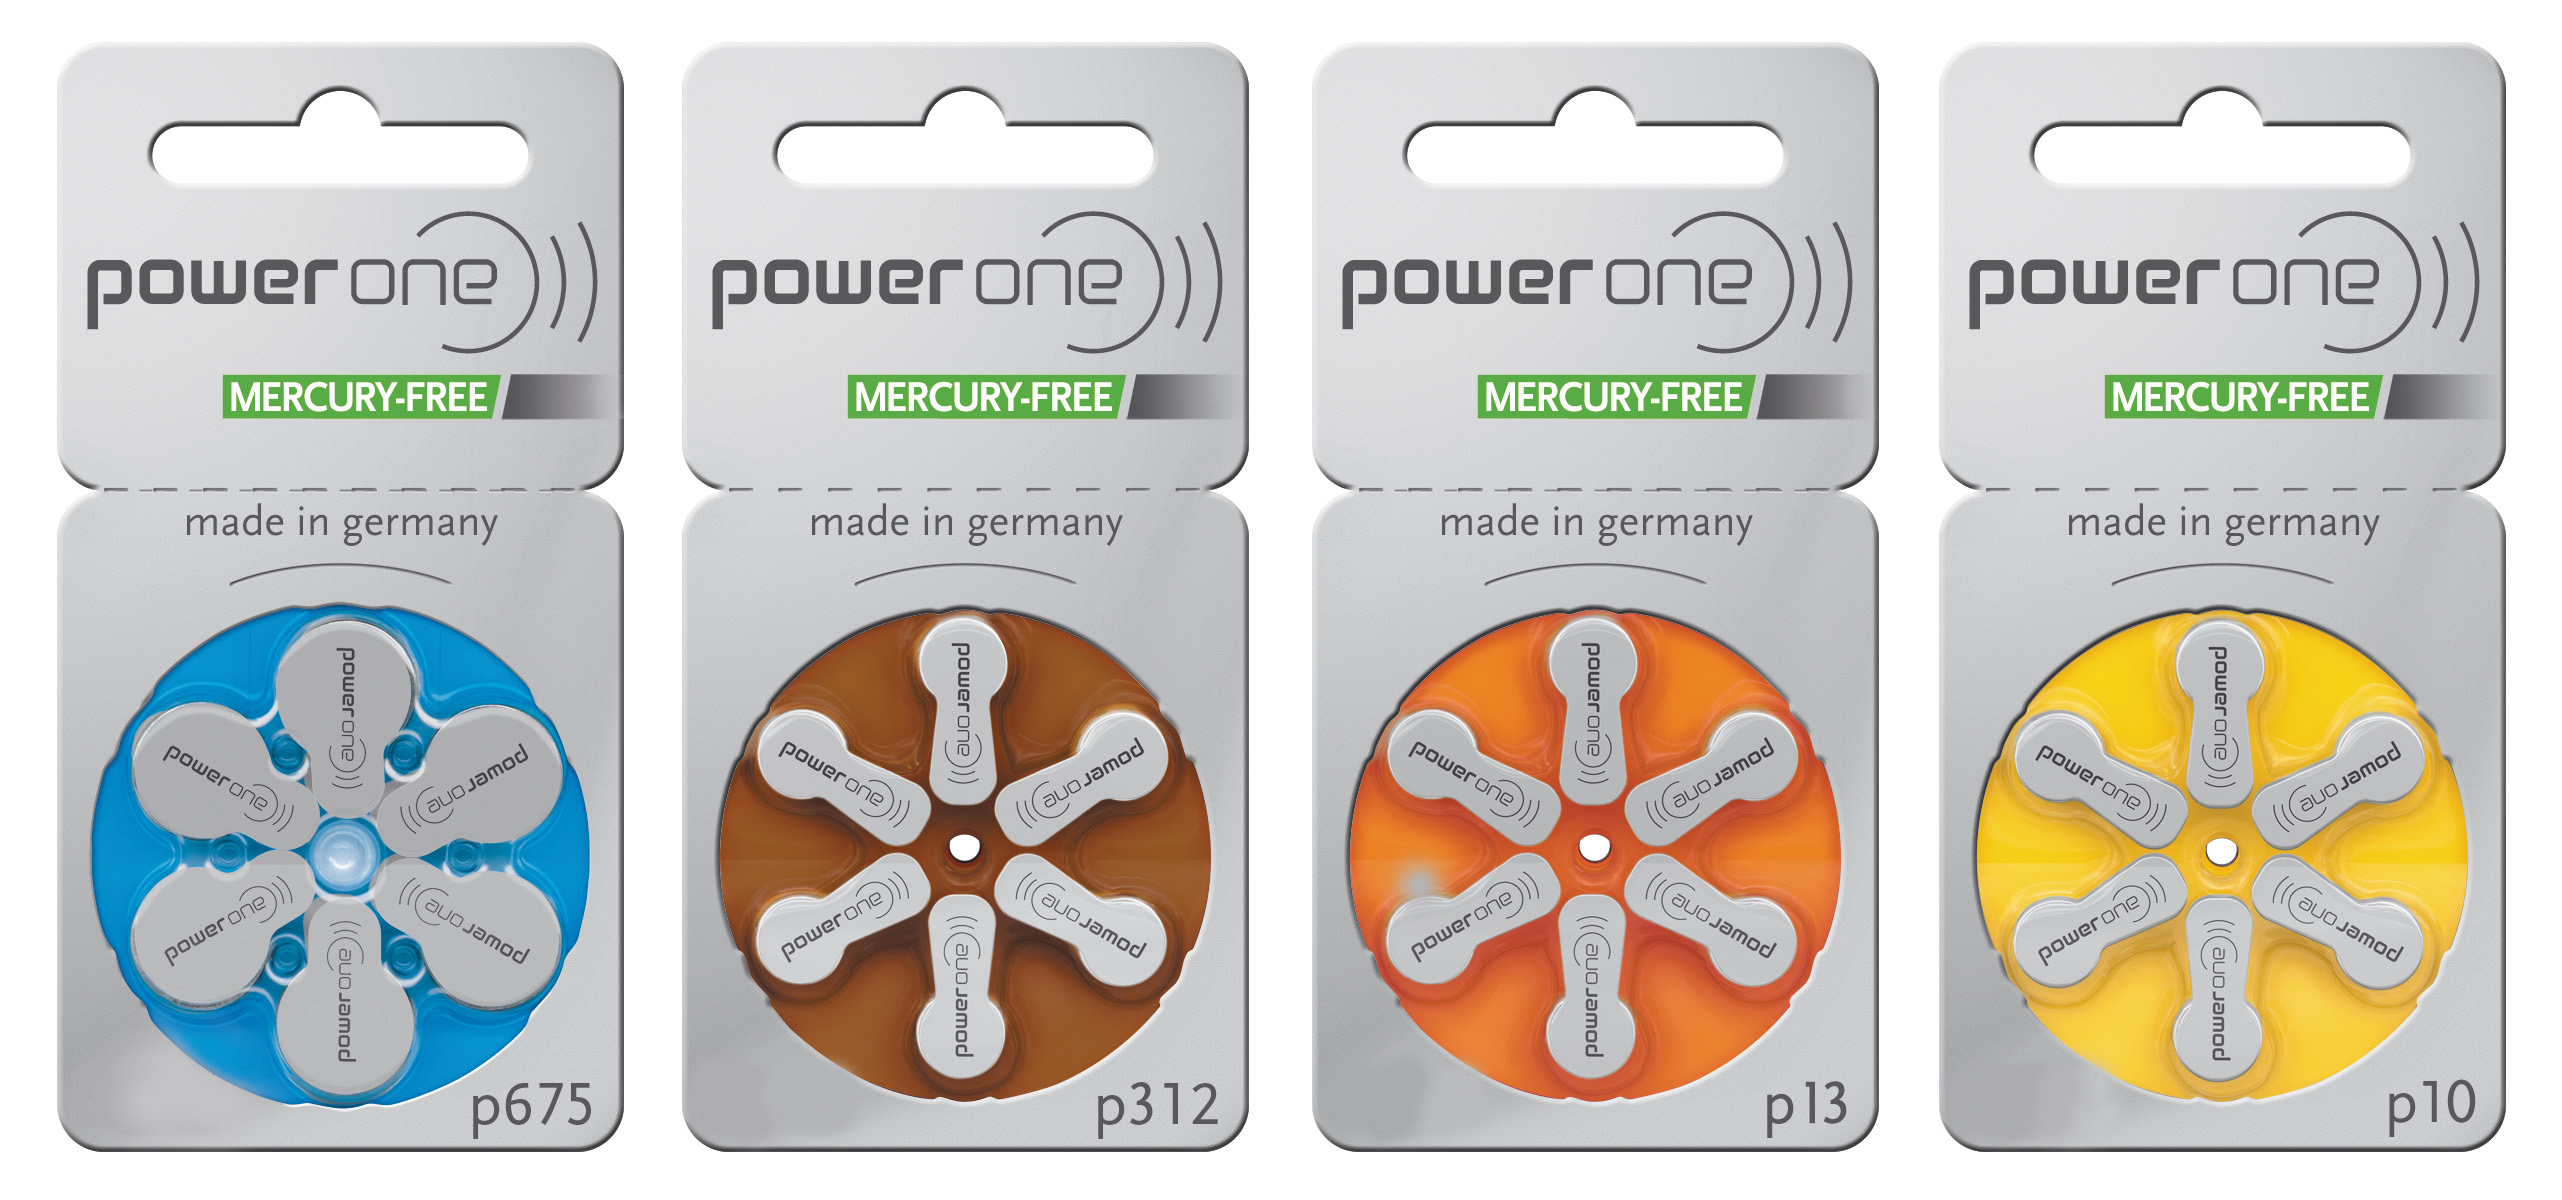 power one mercury-free hearing aid batte...